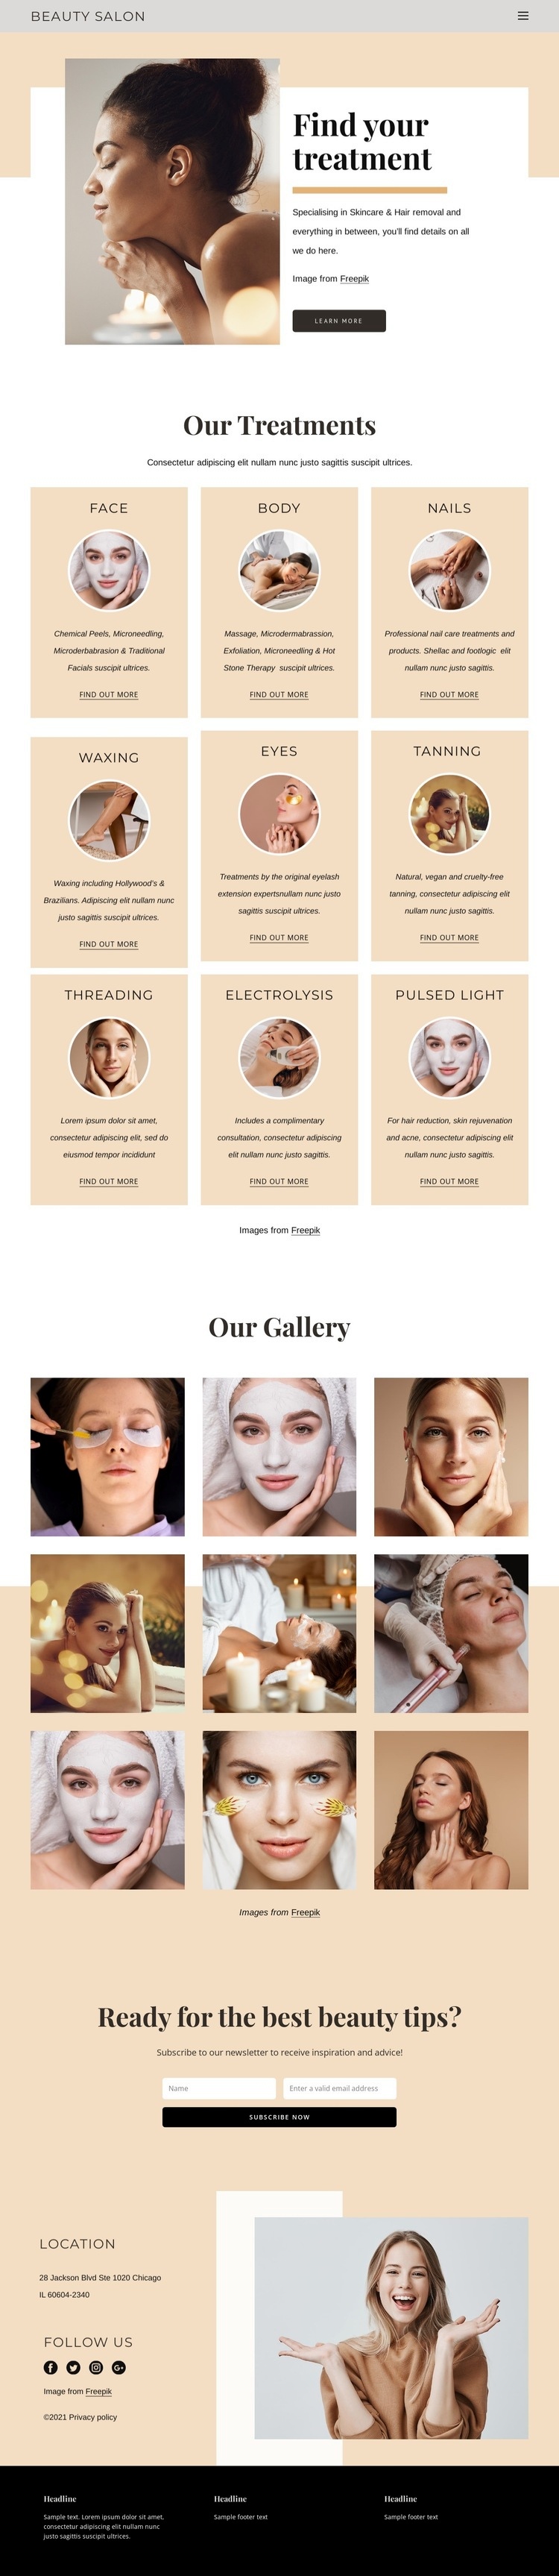 Professional beauty treatments Web Page Design